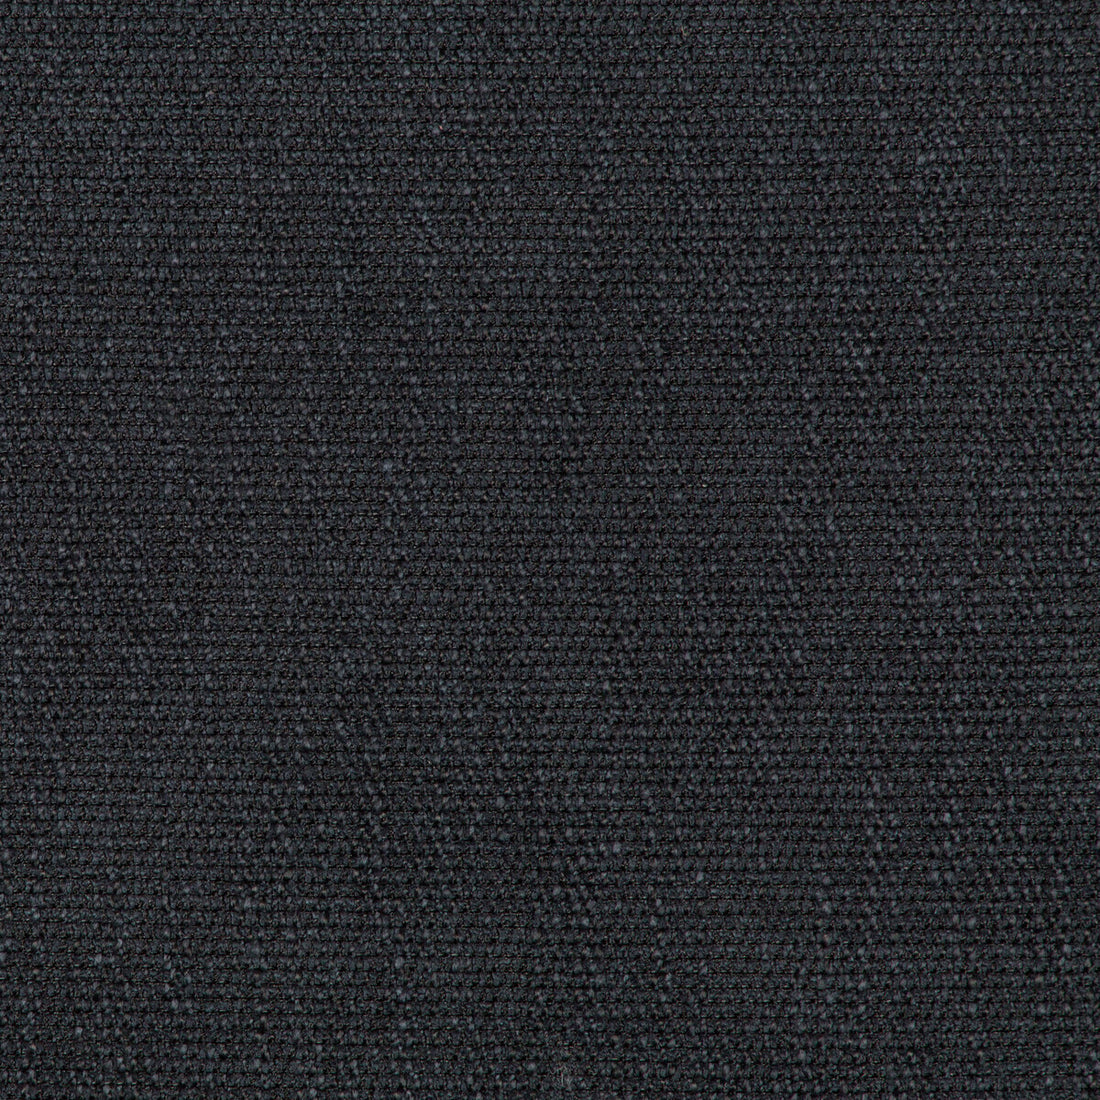 Kravet Smart fabric in 35943-58 color - pattern 35943.58.0 - by Kravet Smart in the Performance Kravetarmor collection